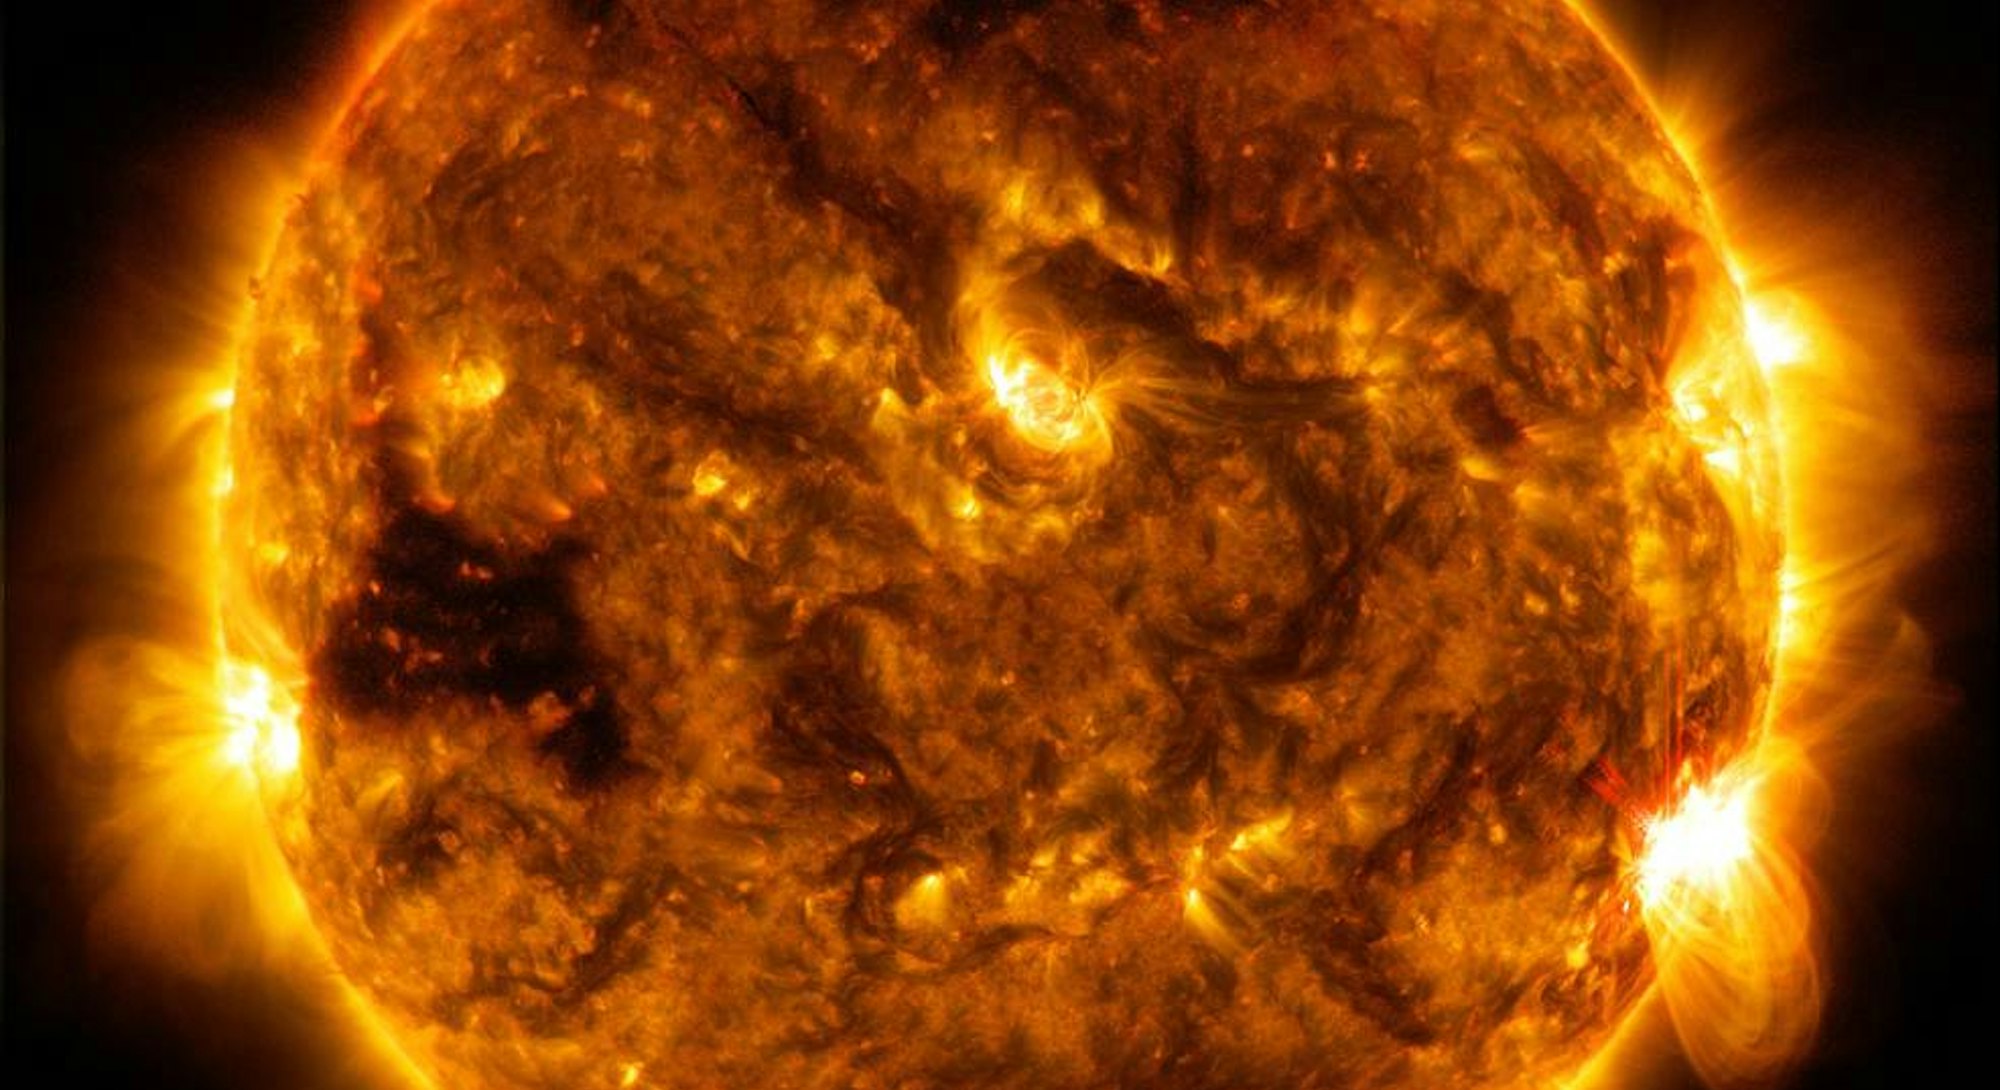 Sun emitting solar flare